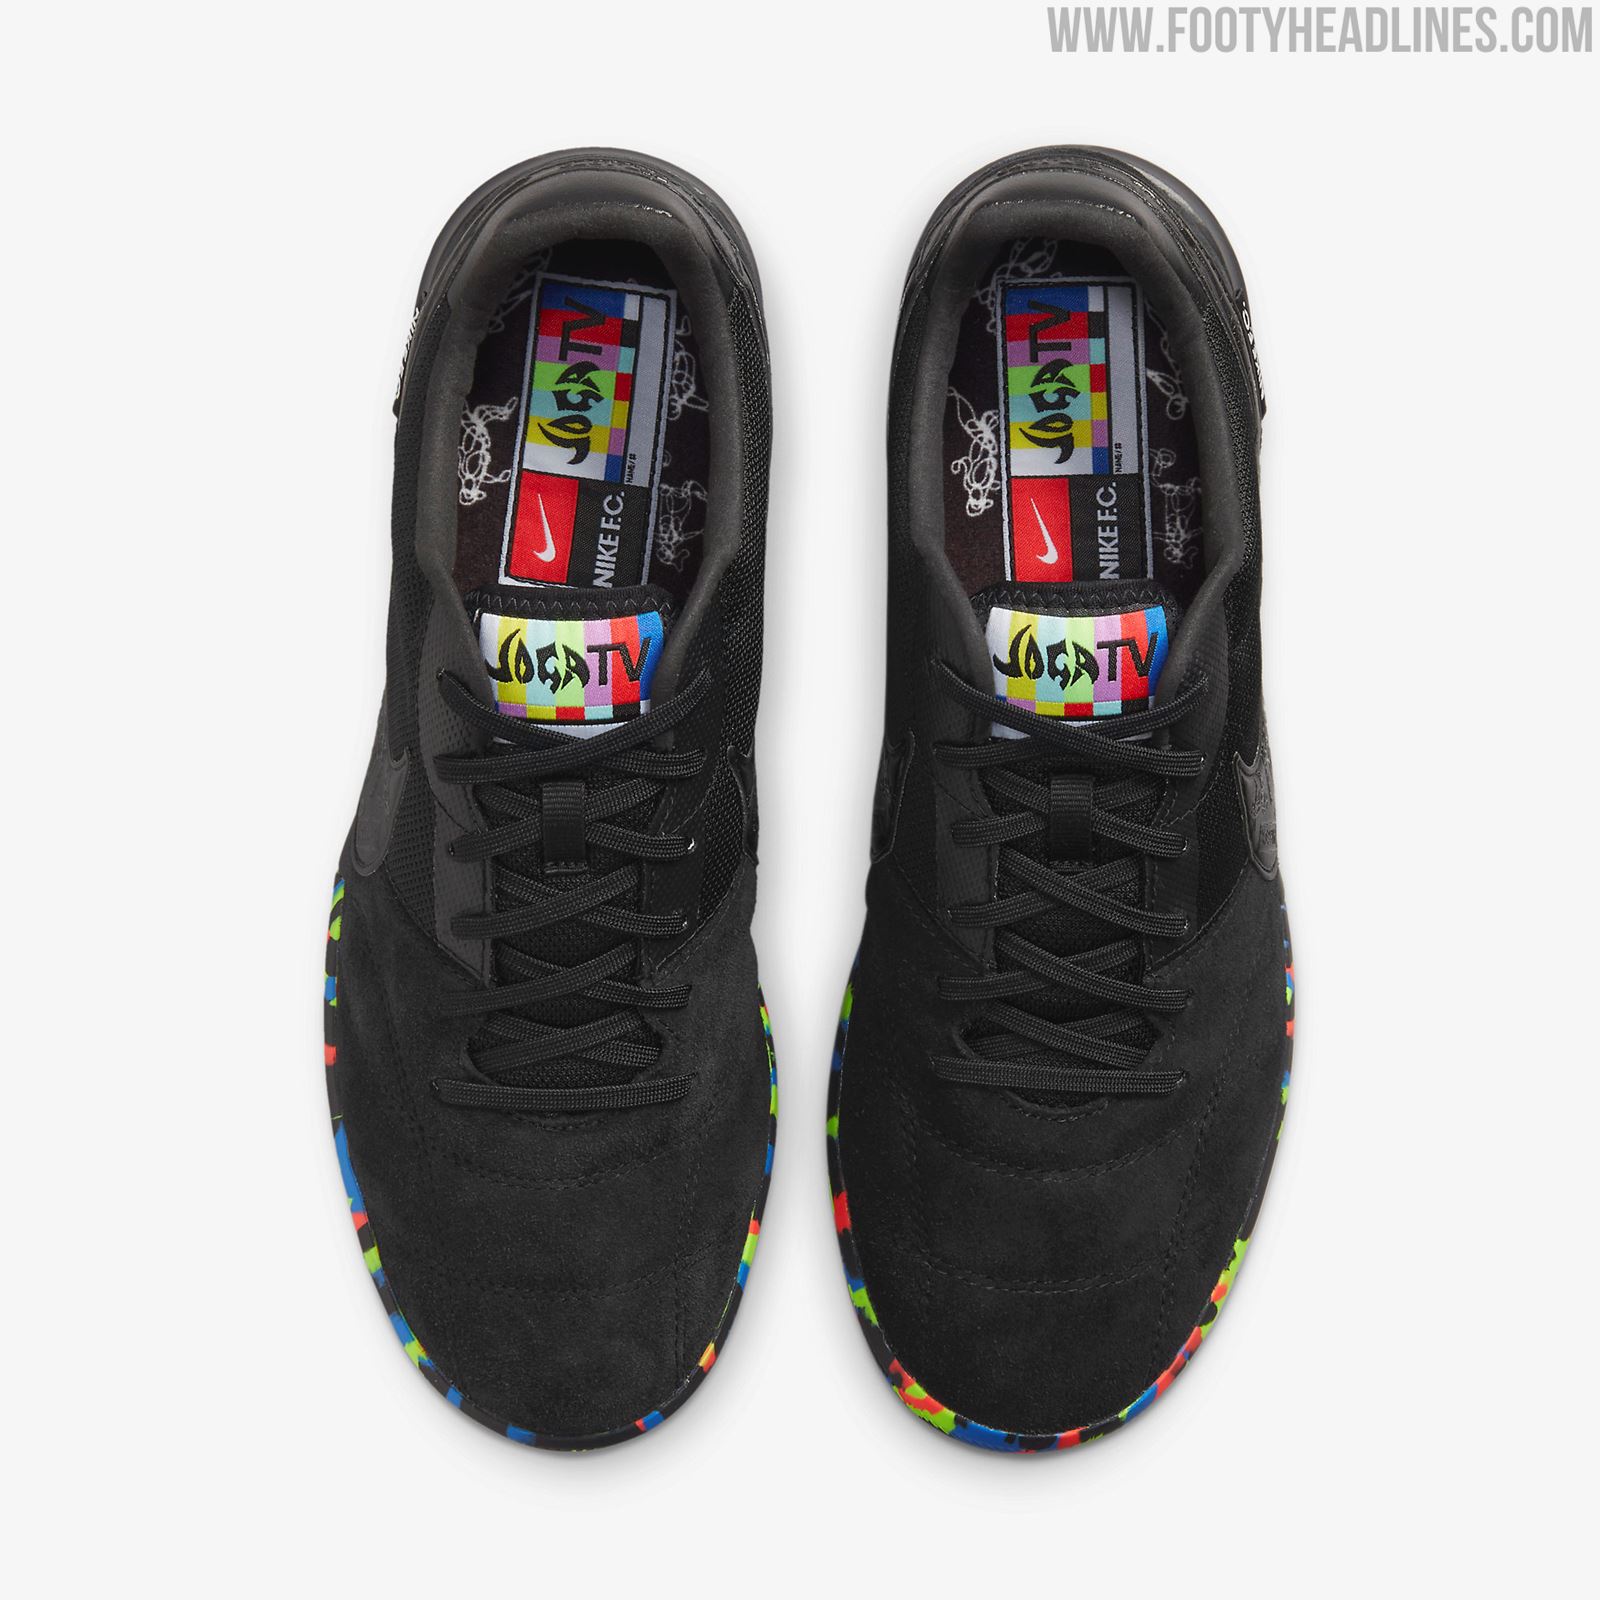 Nike 2 Sala 'Joga TV' Boots Released - Headlines